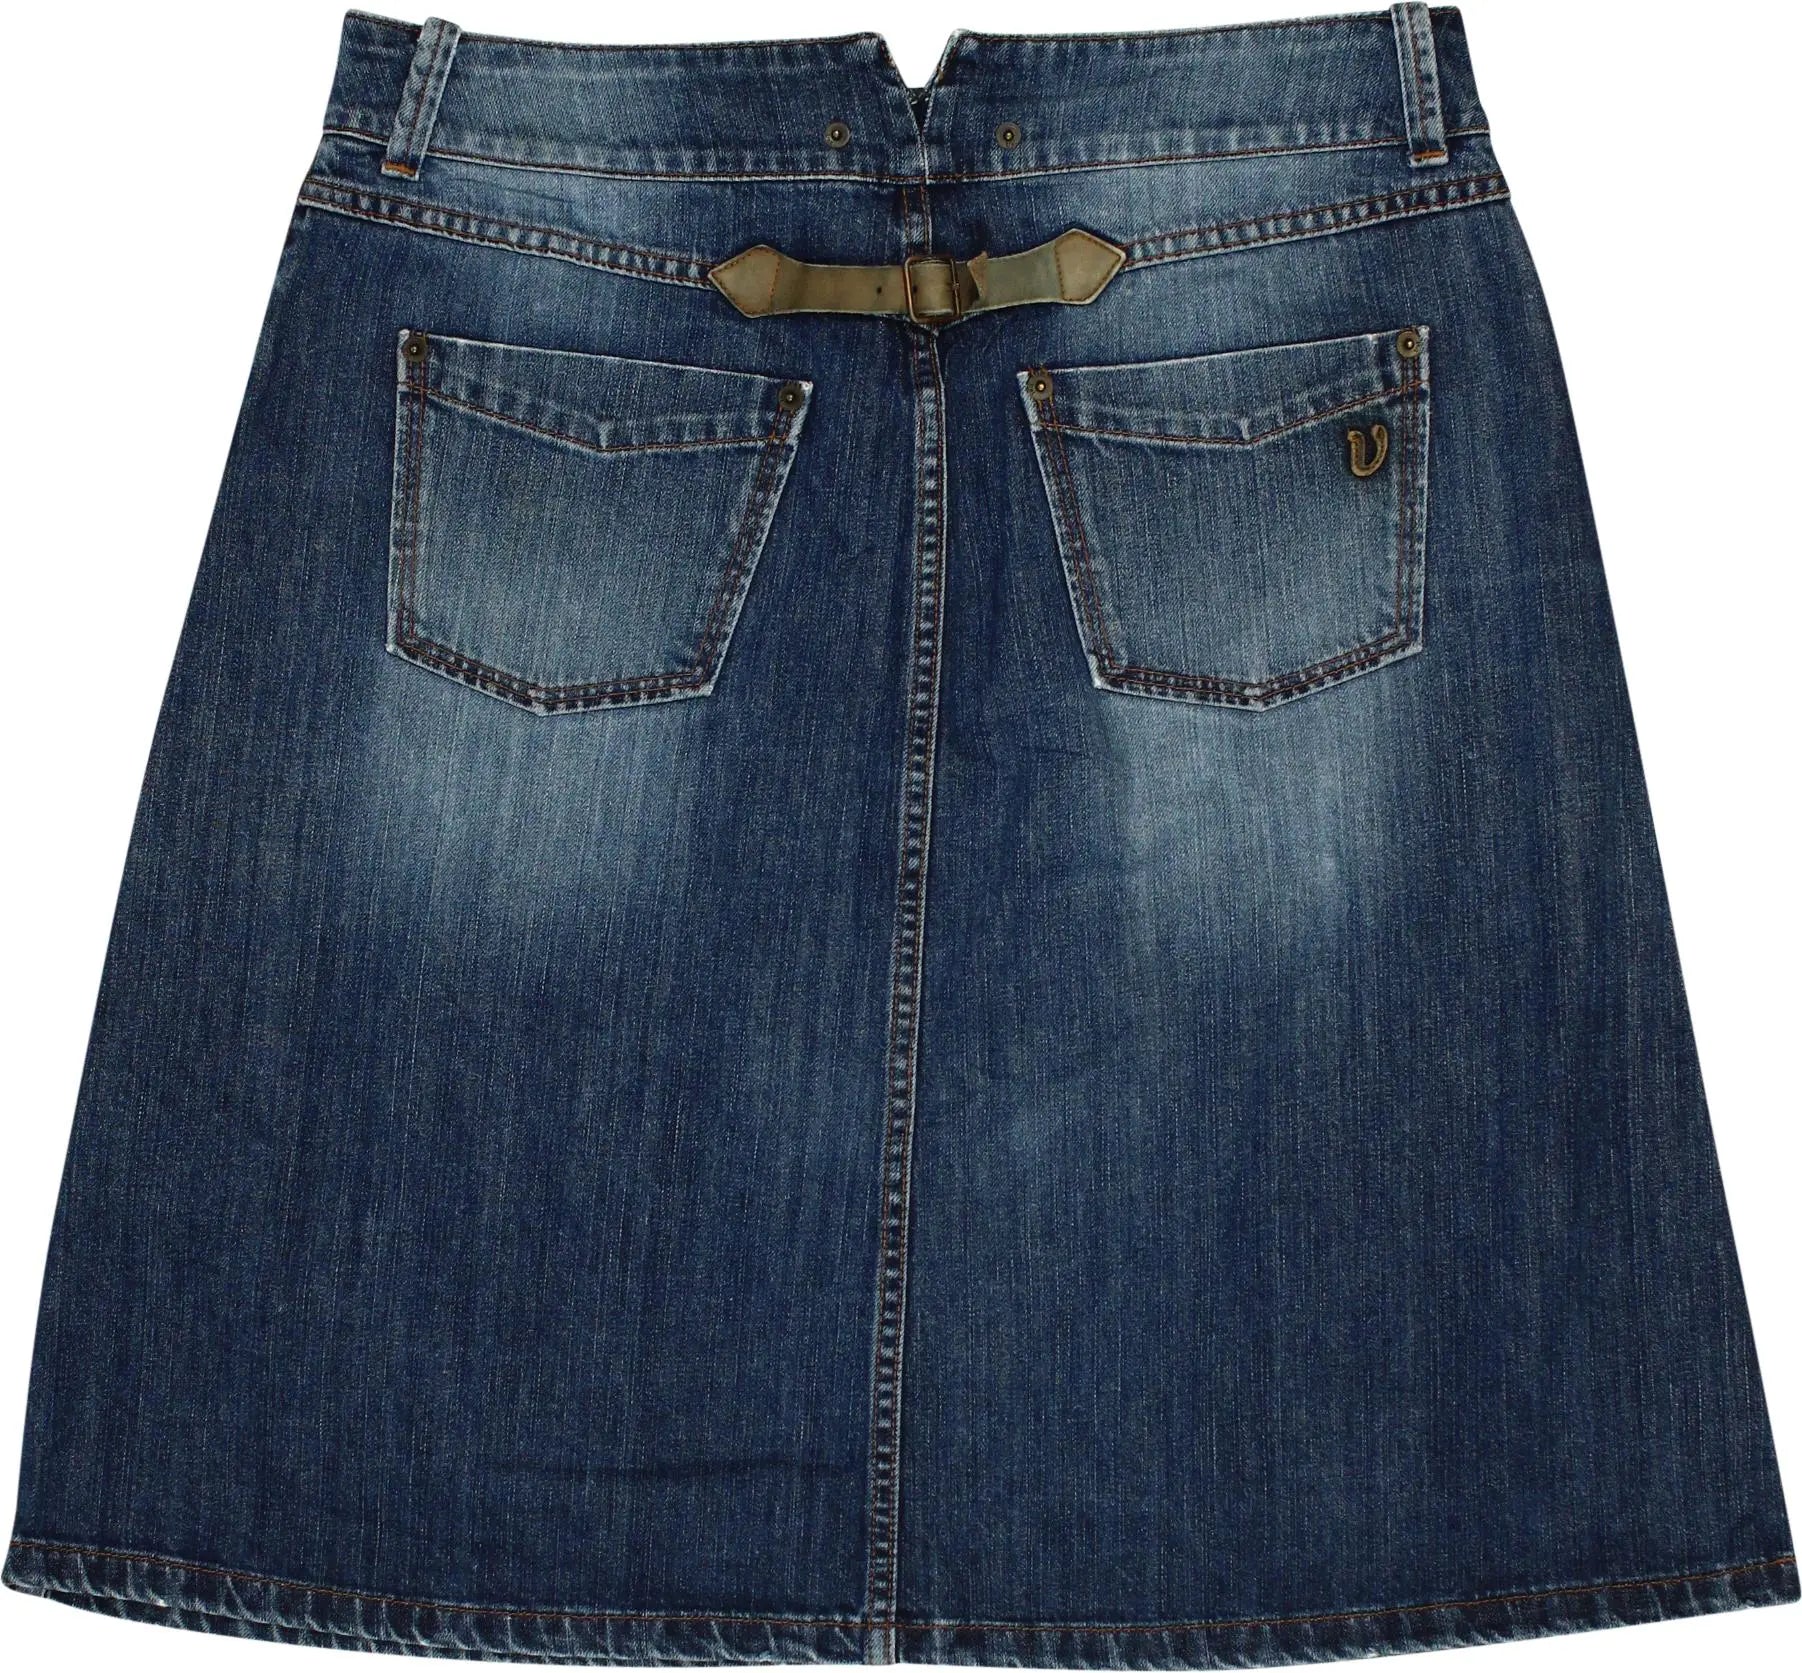 Vanilia - Denim Skirt- ThriftTale.com - Vintage and second handclothing